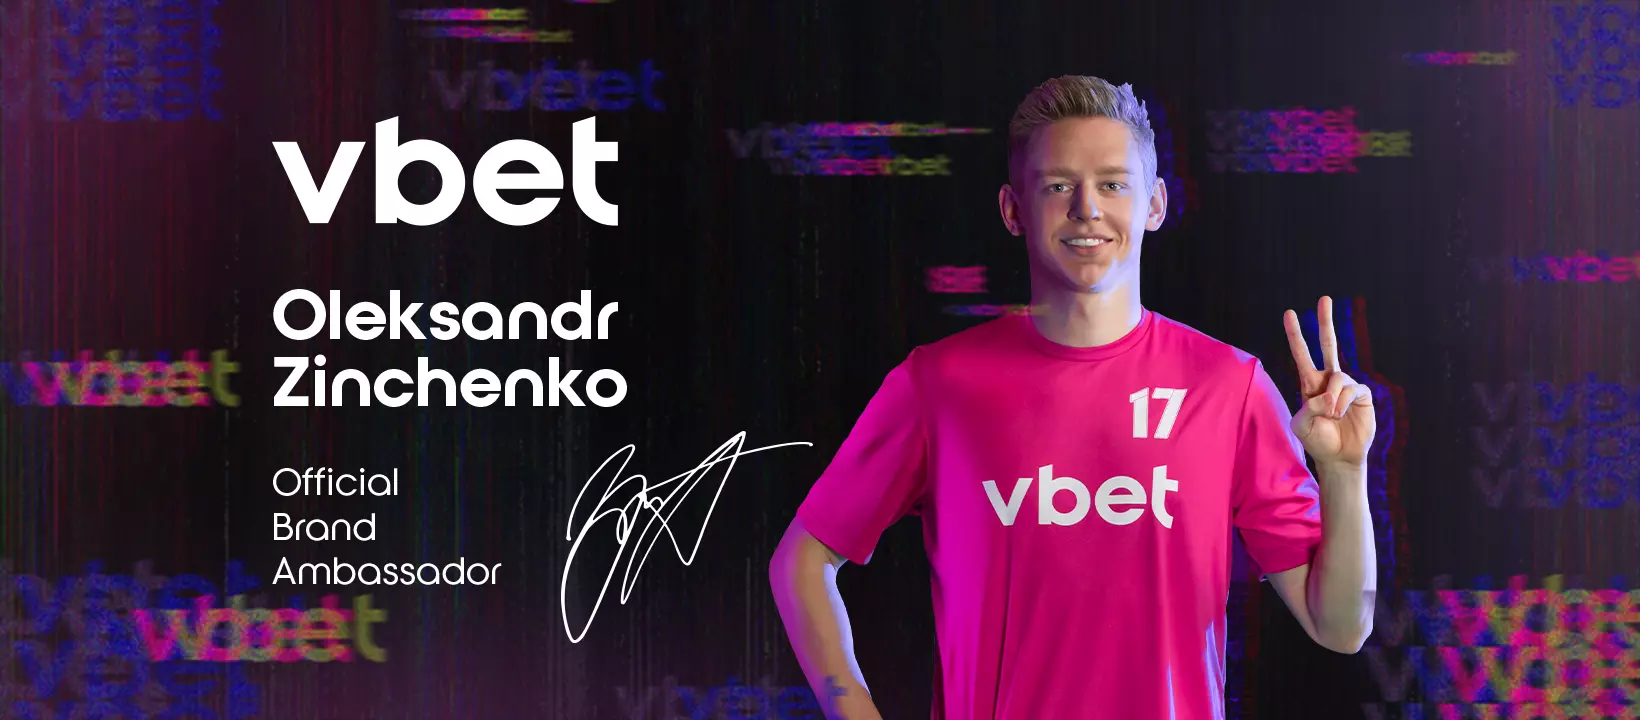 Oleksandr Zinchenko becomes VBET ambassador